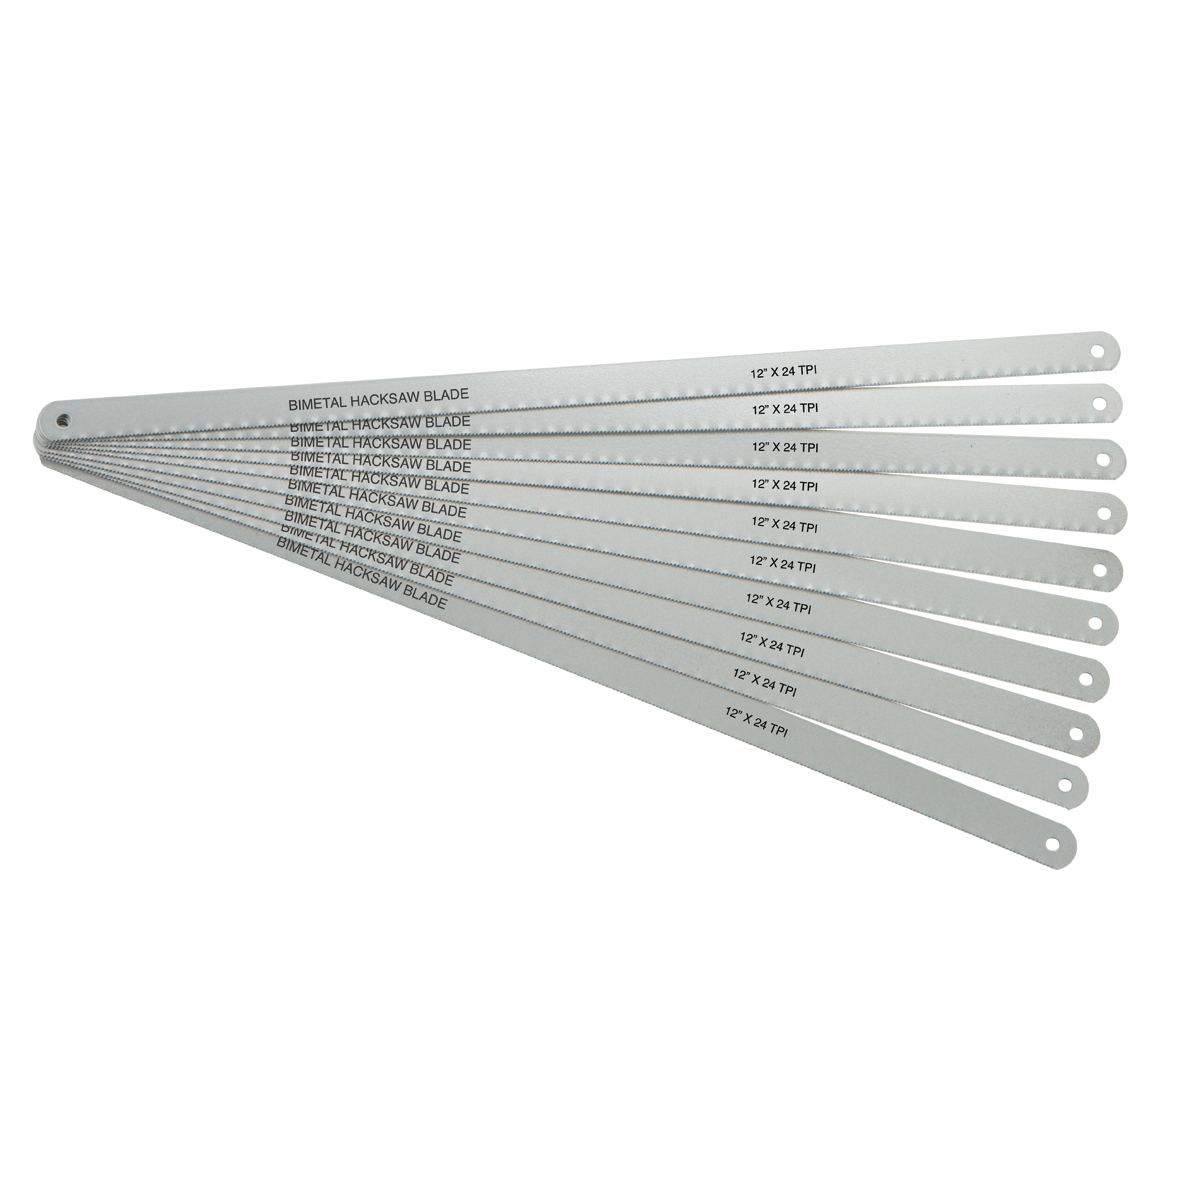 PORTLAND 12 in. 24 TPI Bi-metal Hacksaw Blades 10 Pk. - Item 60285 / 38759